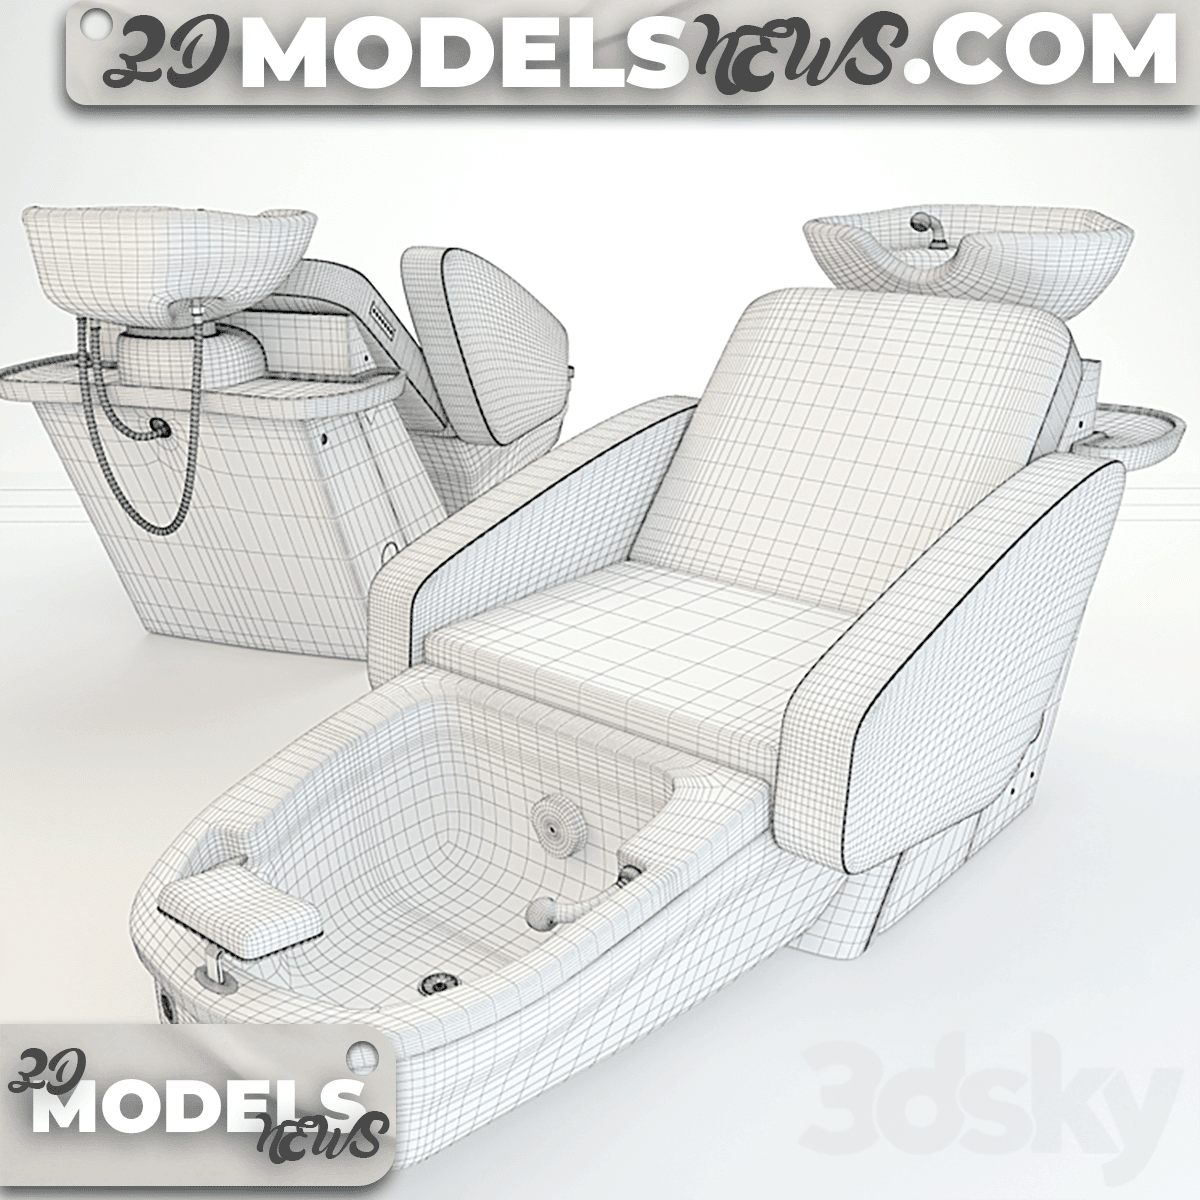 Maletti Mercury Air Massage wash unit model with pedicure bowl 6